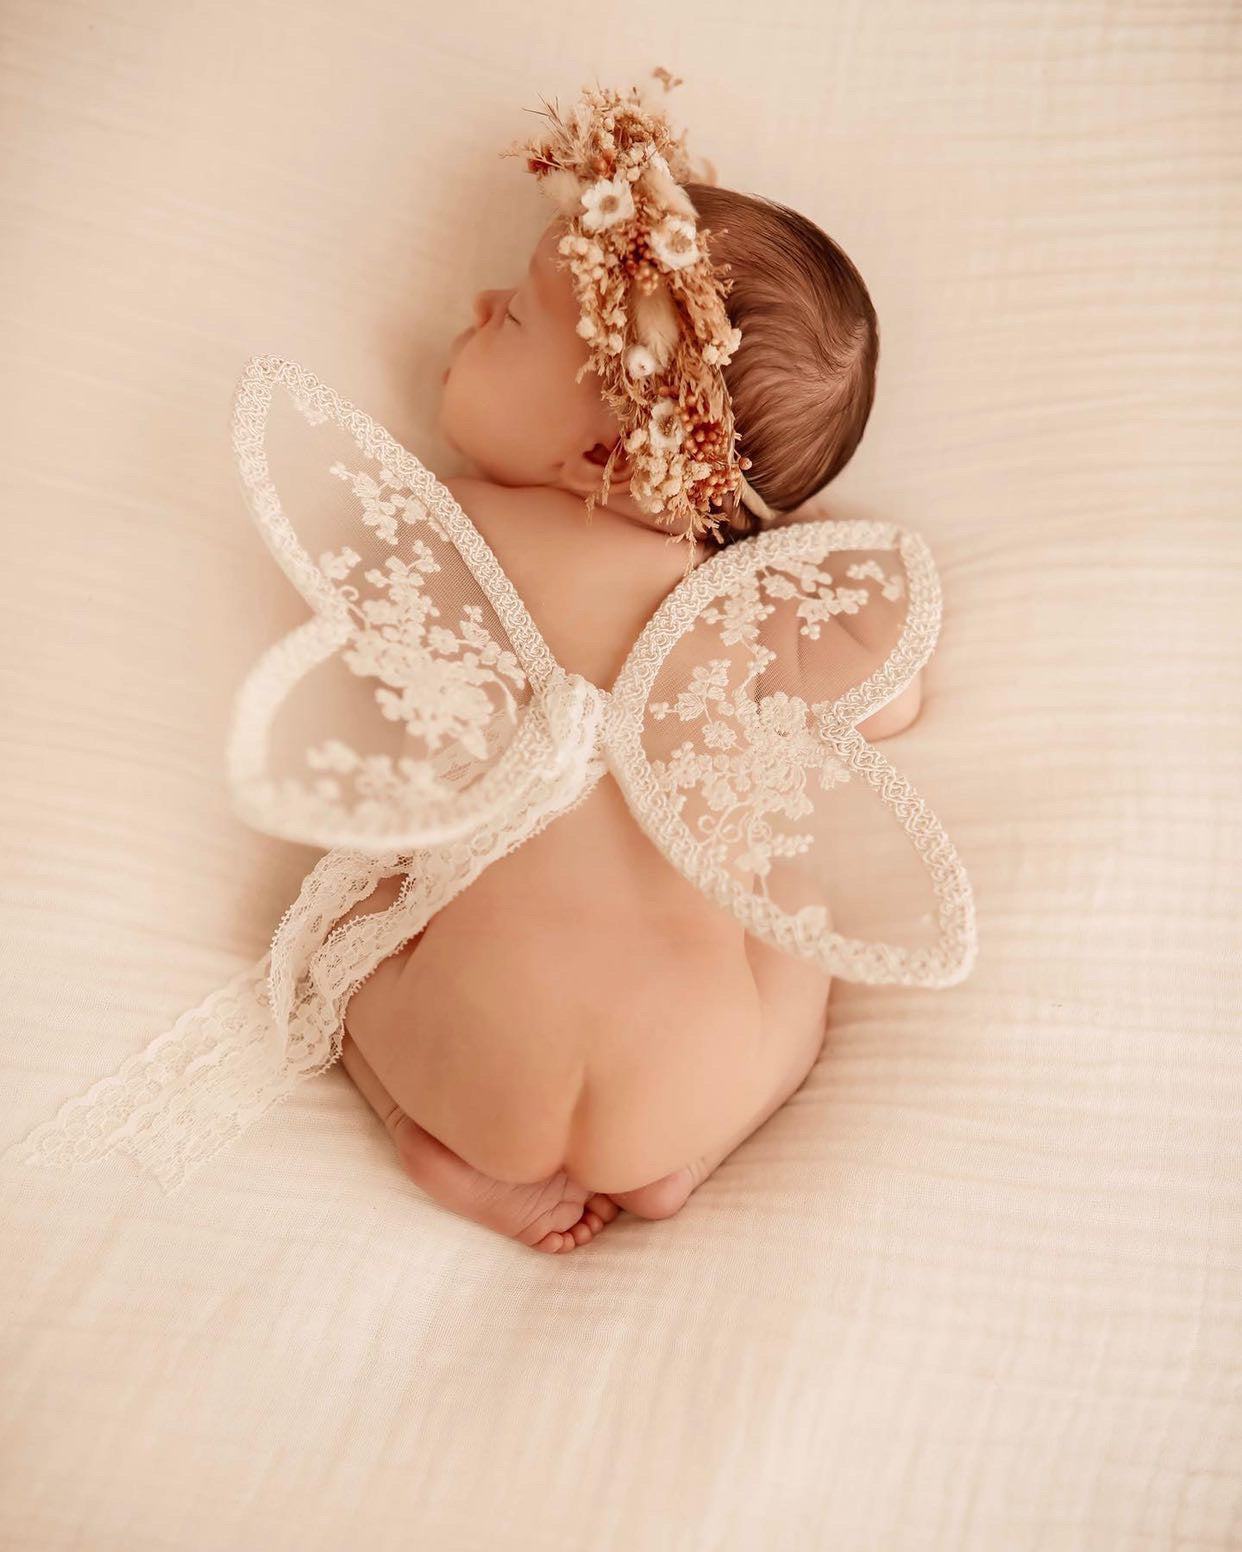 Everlasting newborn flowercrown - stretchy soft elastic headband.